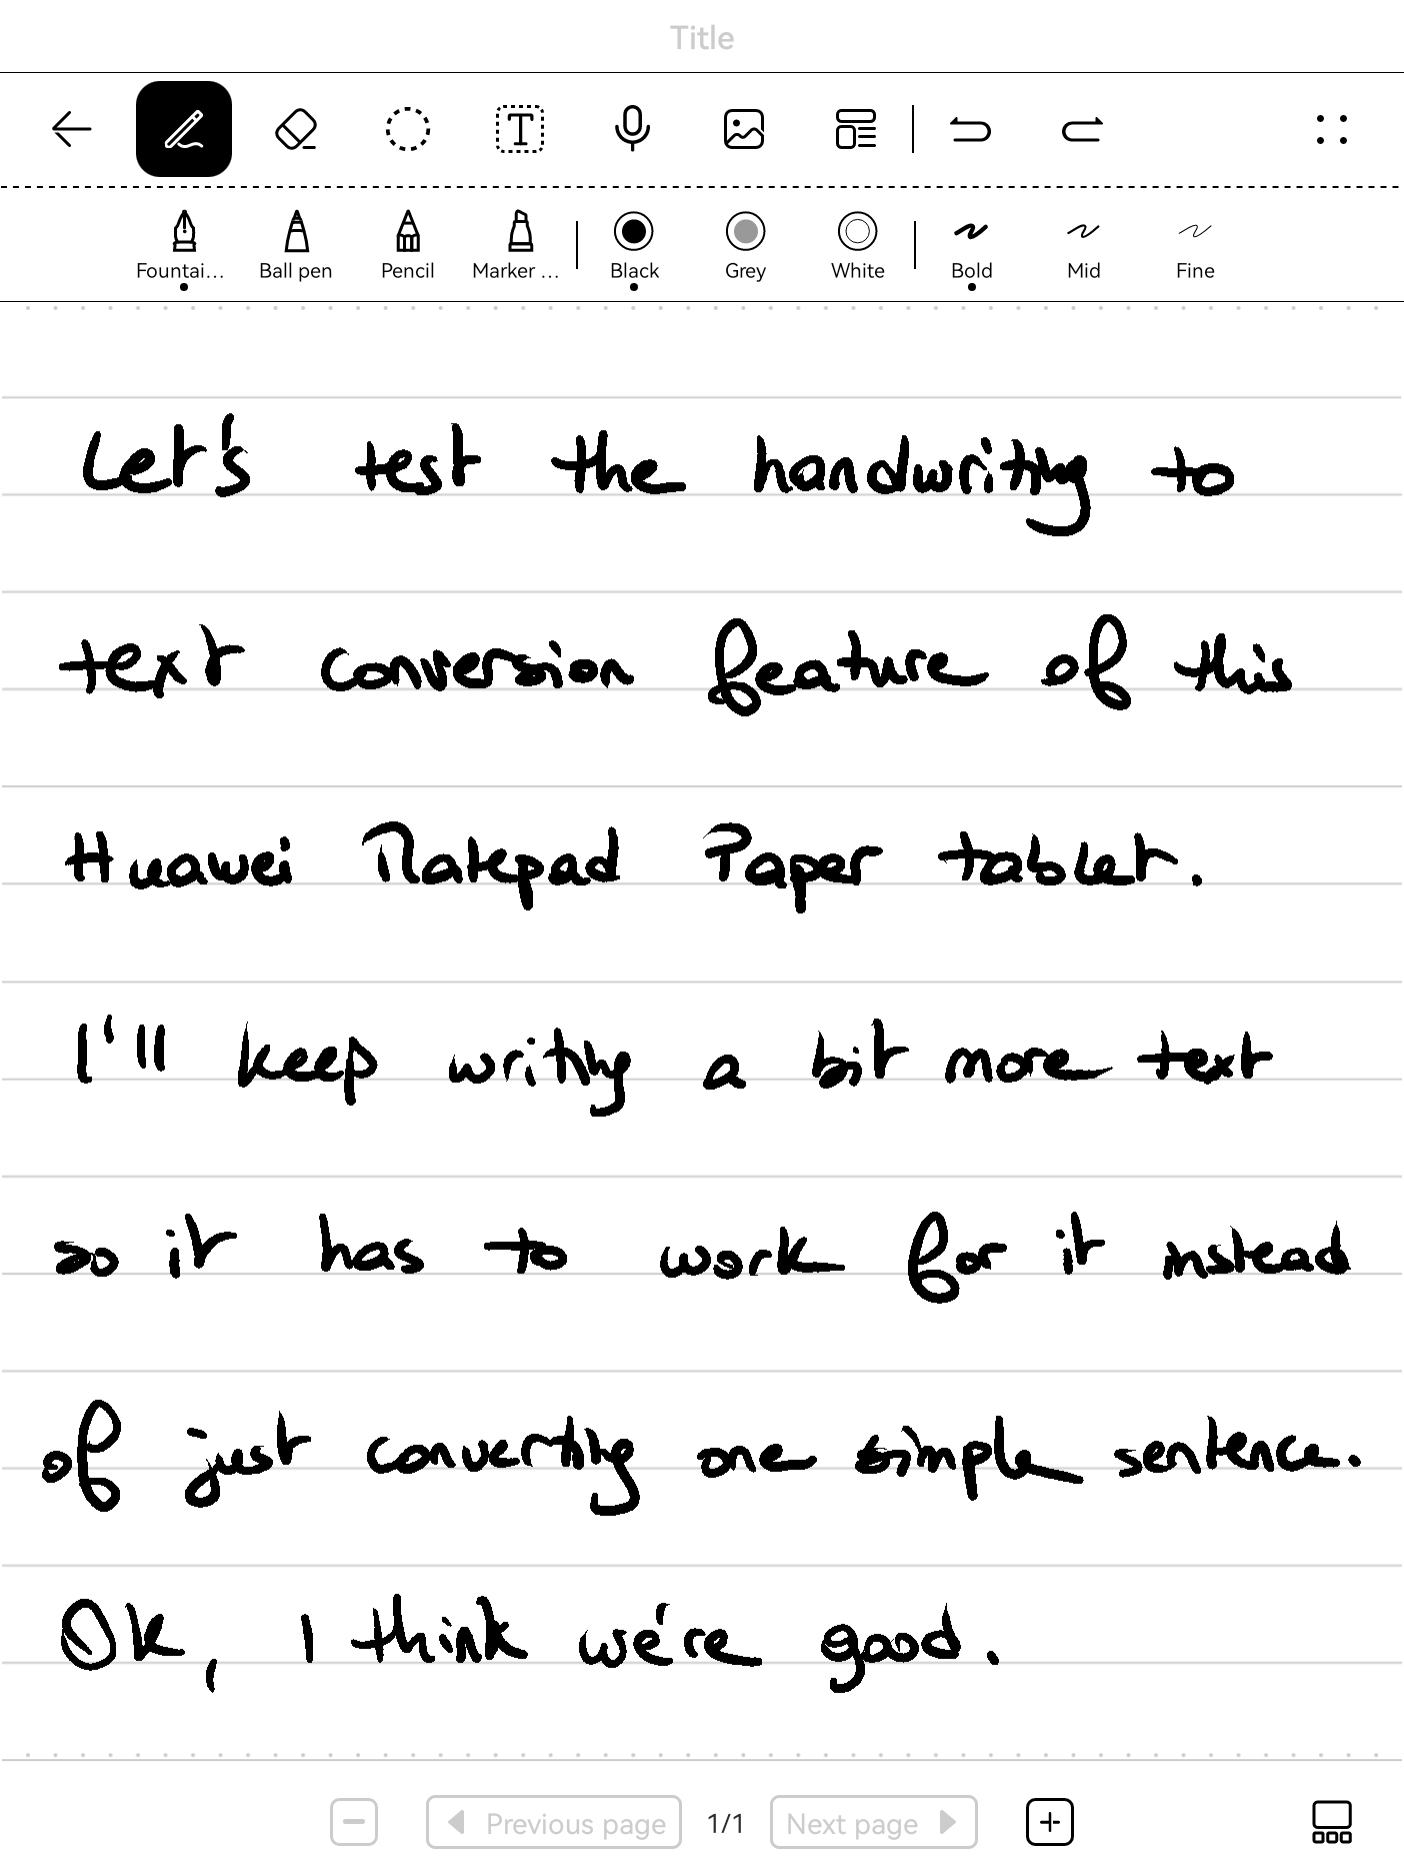 handrwitten note on Huawei MatePad Paper